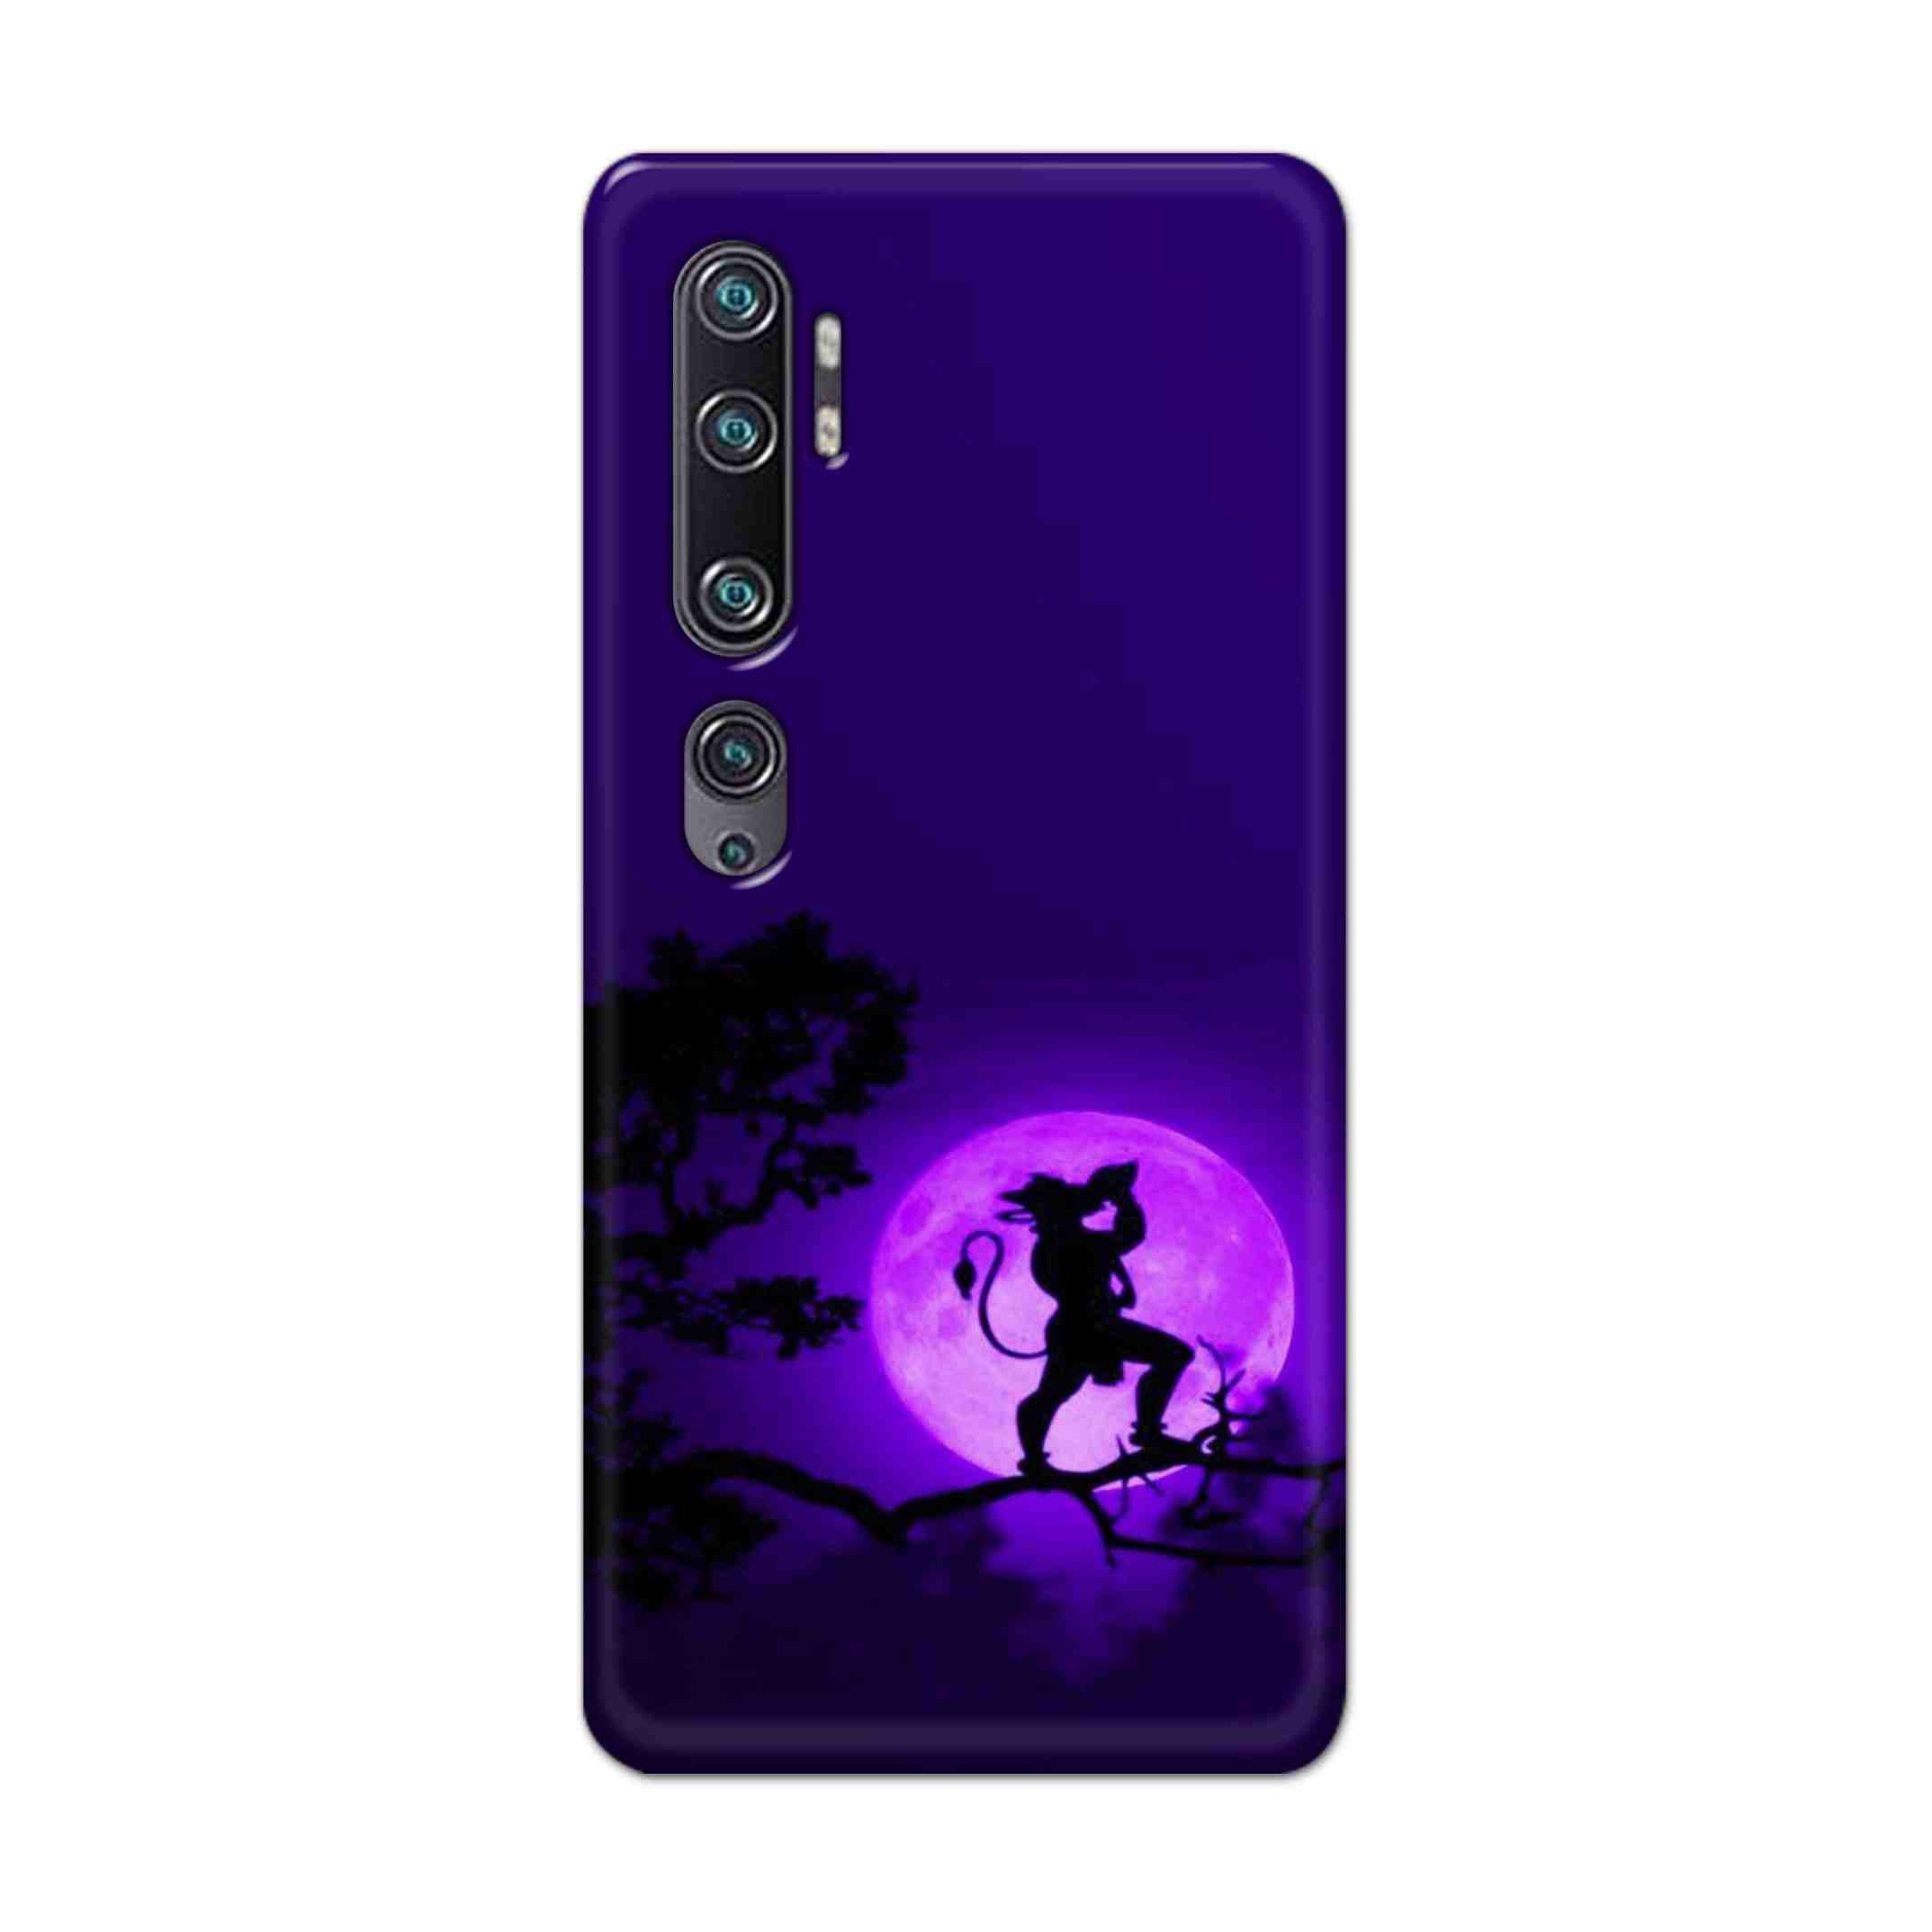 Buy Hanuman Hard Back Mobile Phone Case Cover For Xiaomi Mi Note 10 Online